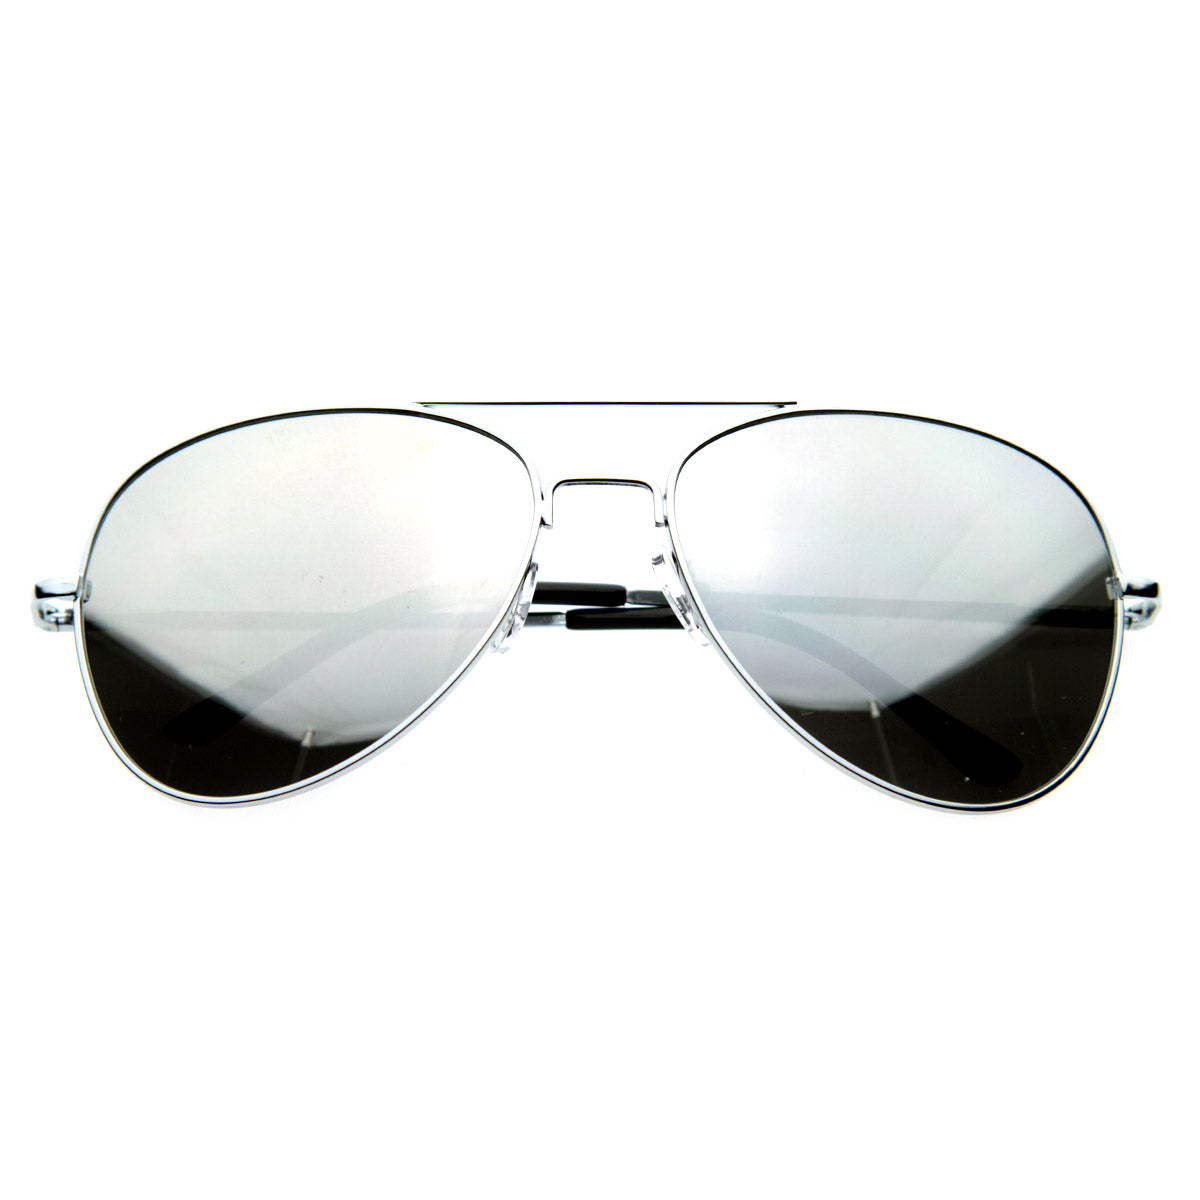 Premium Mirrored Aviator Top Gun Sunglasses w/ Spring Loaded Temples, Silver Each